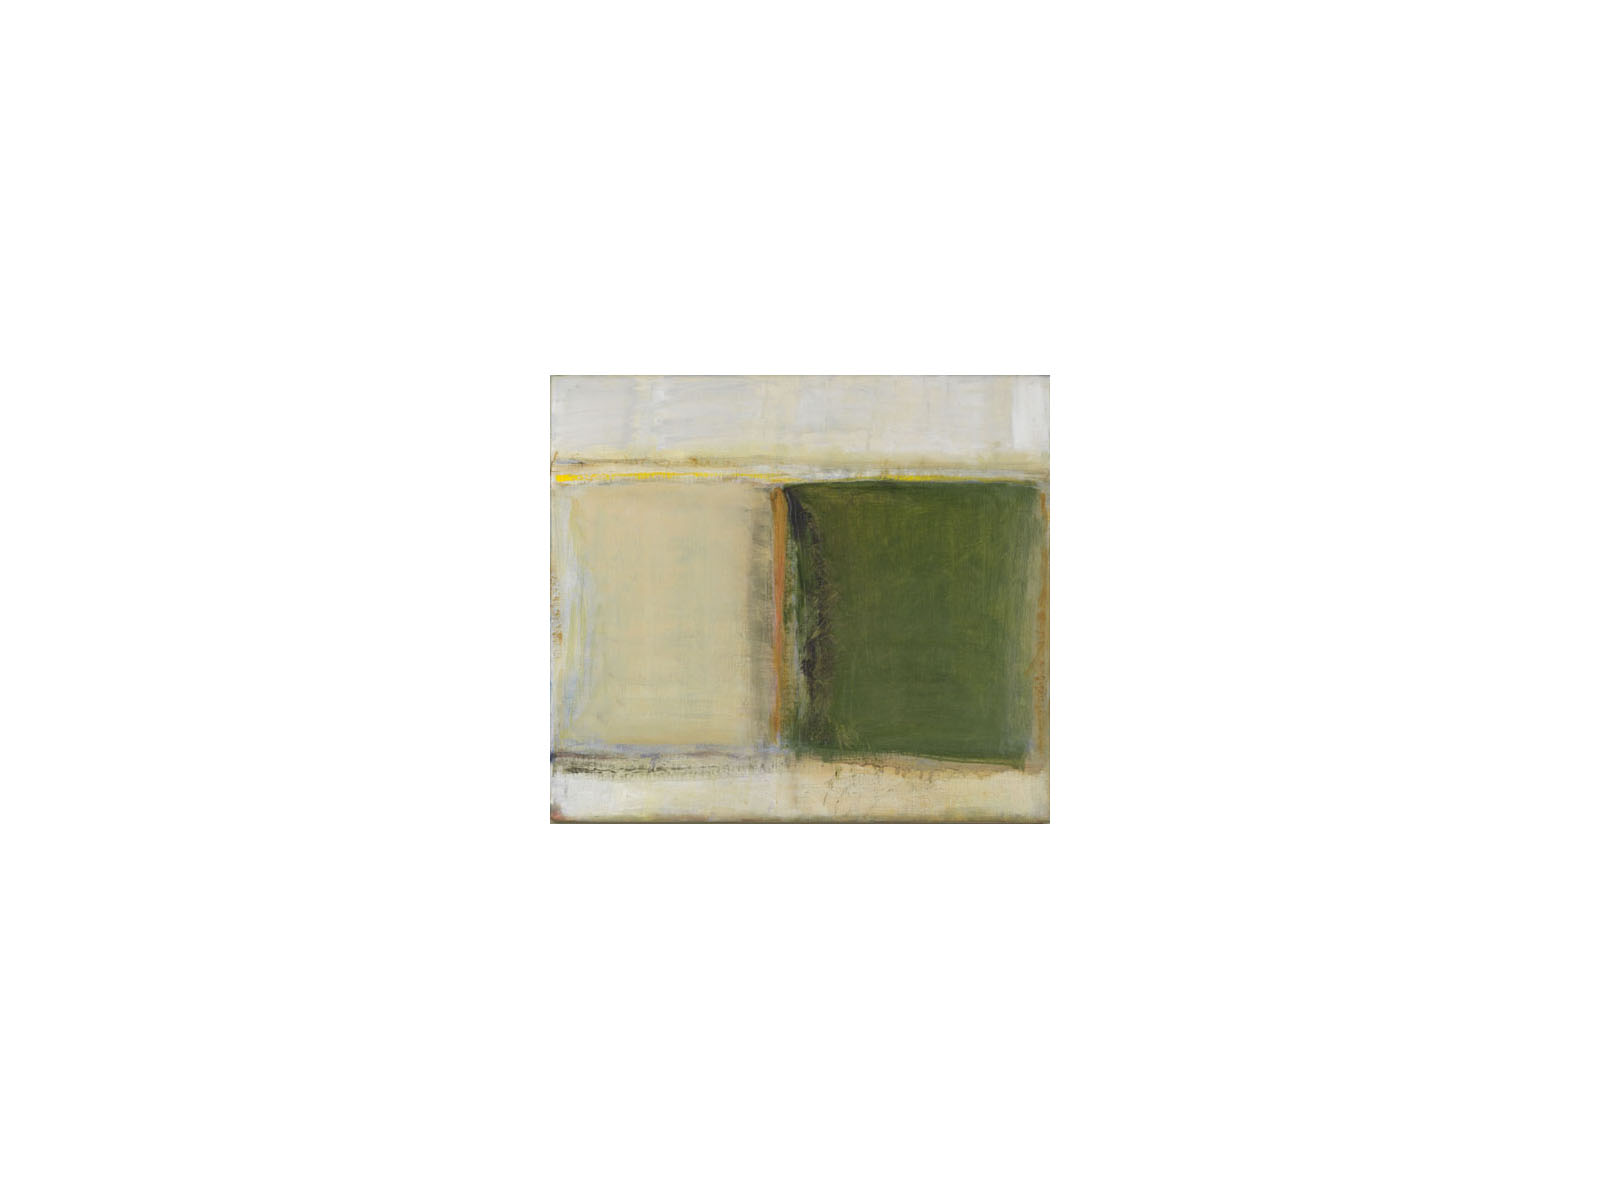 AL17-38, alkyd op linnen, 2017, 40 x 45 cm (sold)